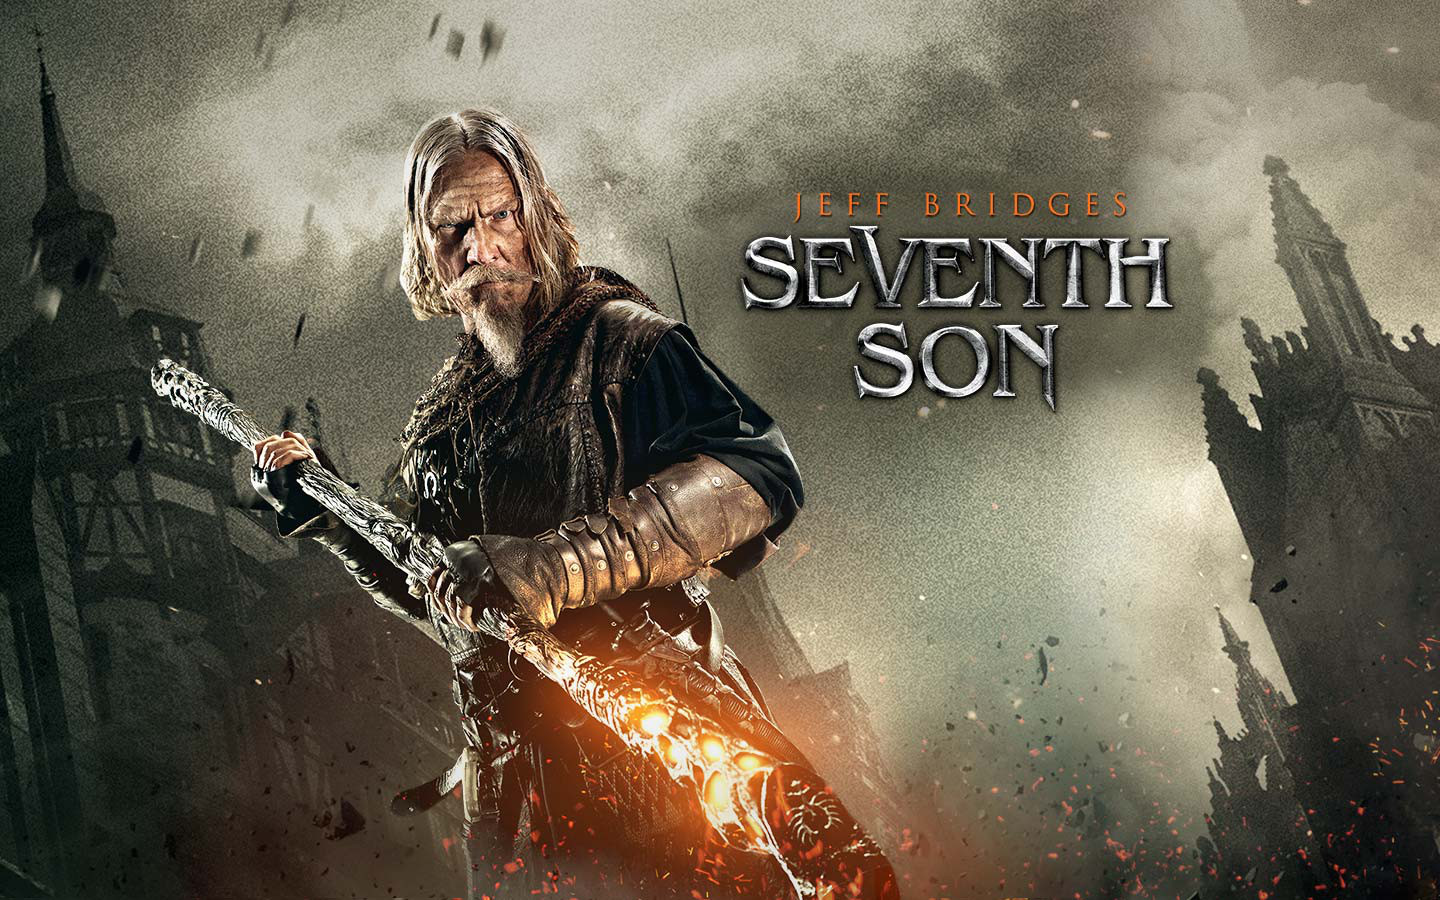 Seventh son full movie in hindi free download utorrent full obvious blink 182 subtitulada torrent